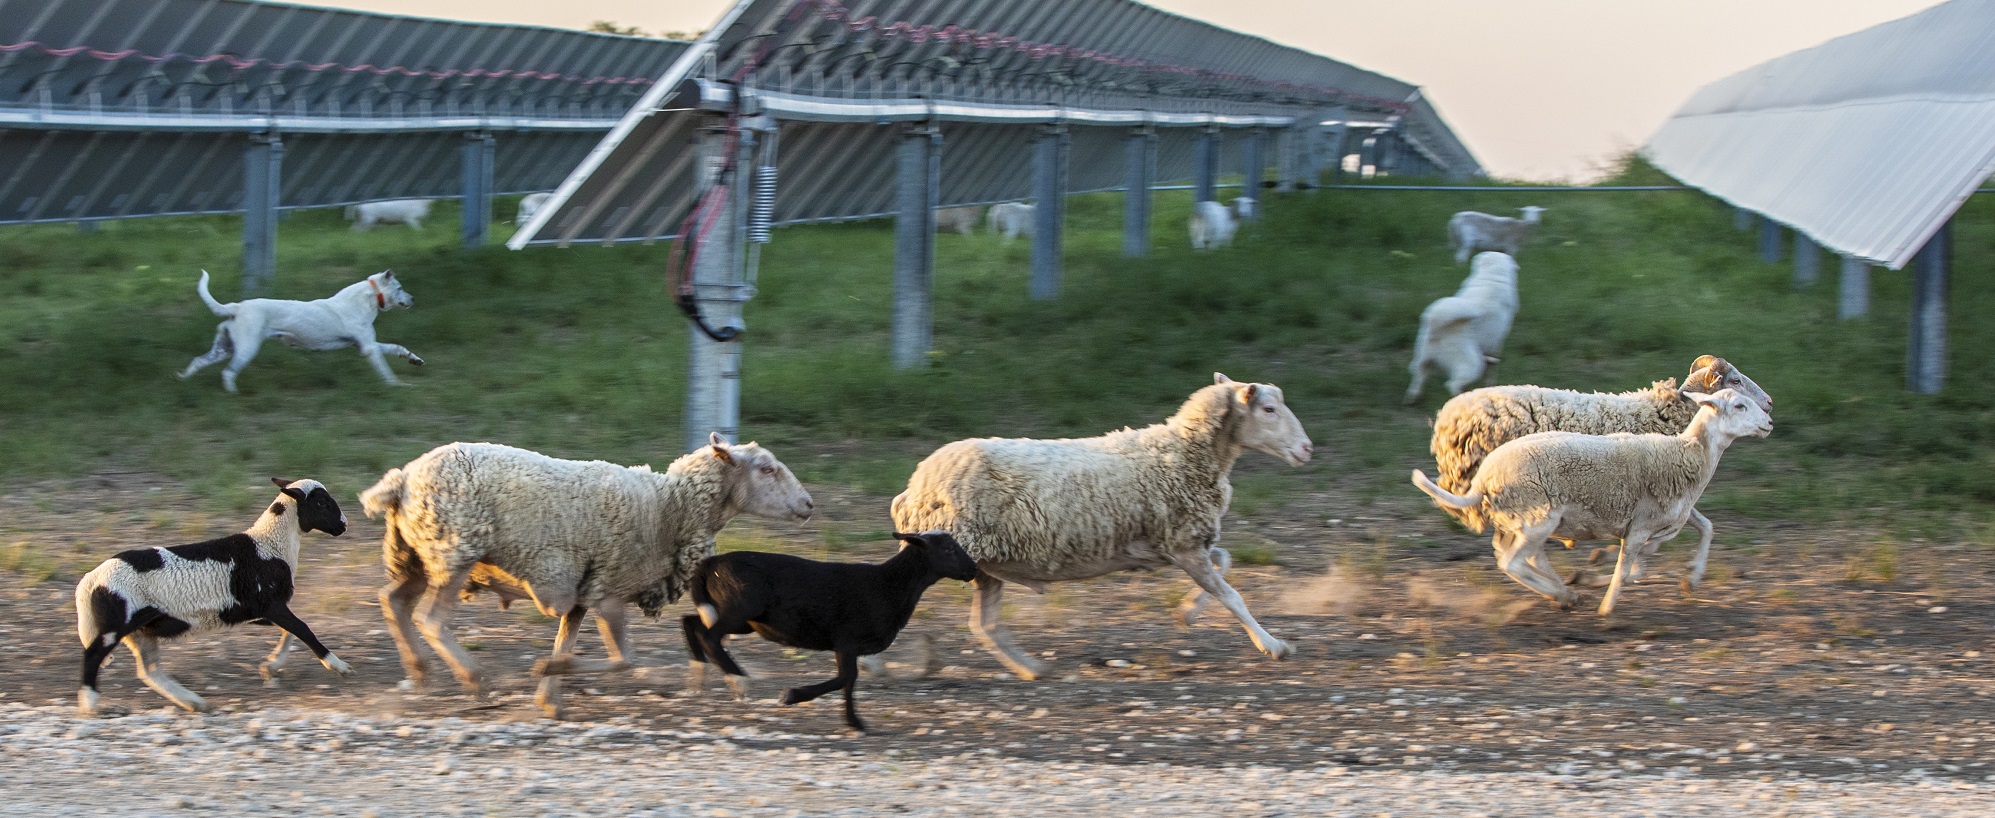 Sheep running past solar panels